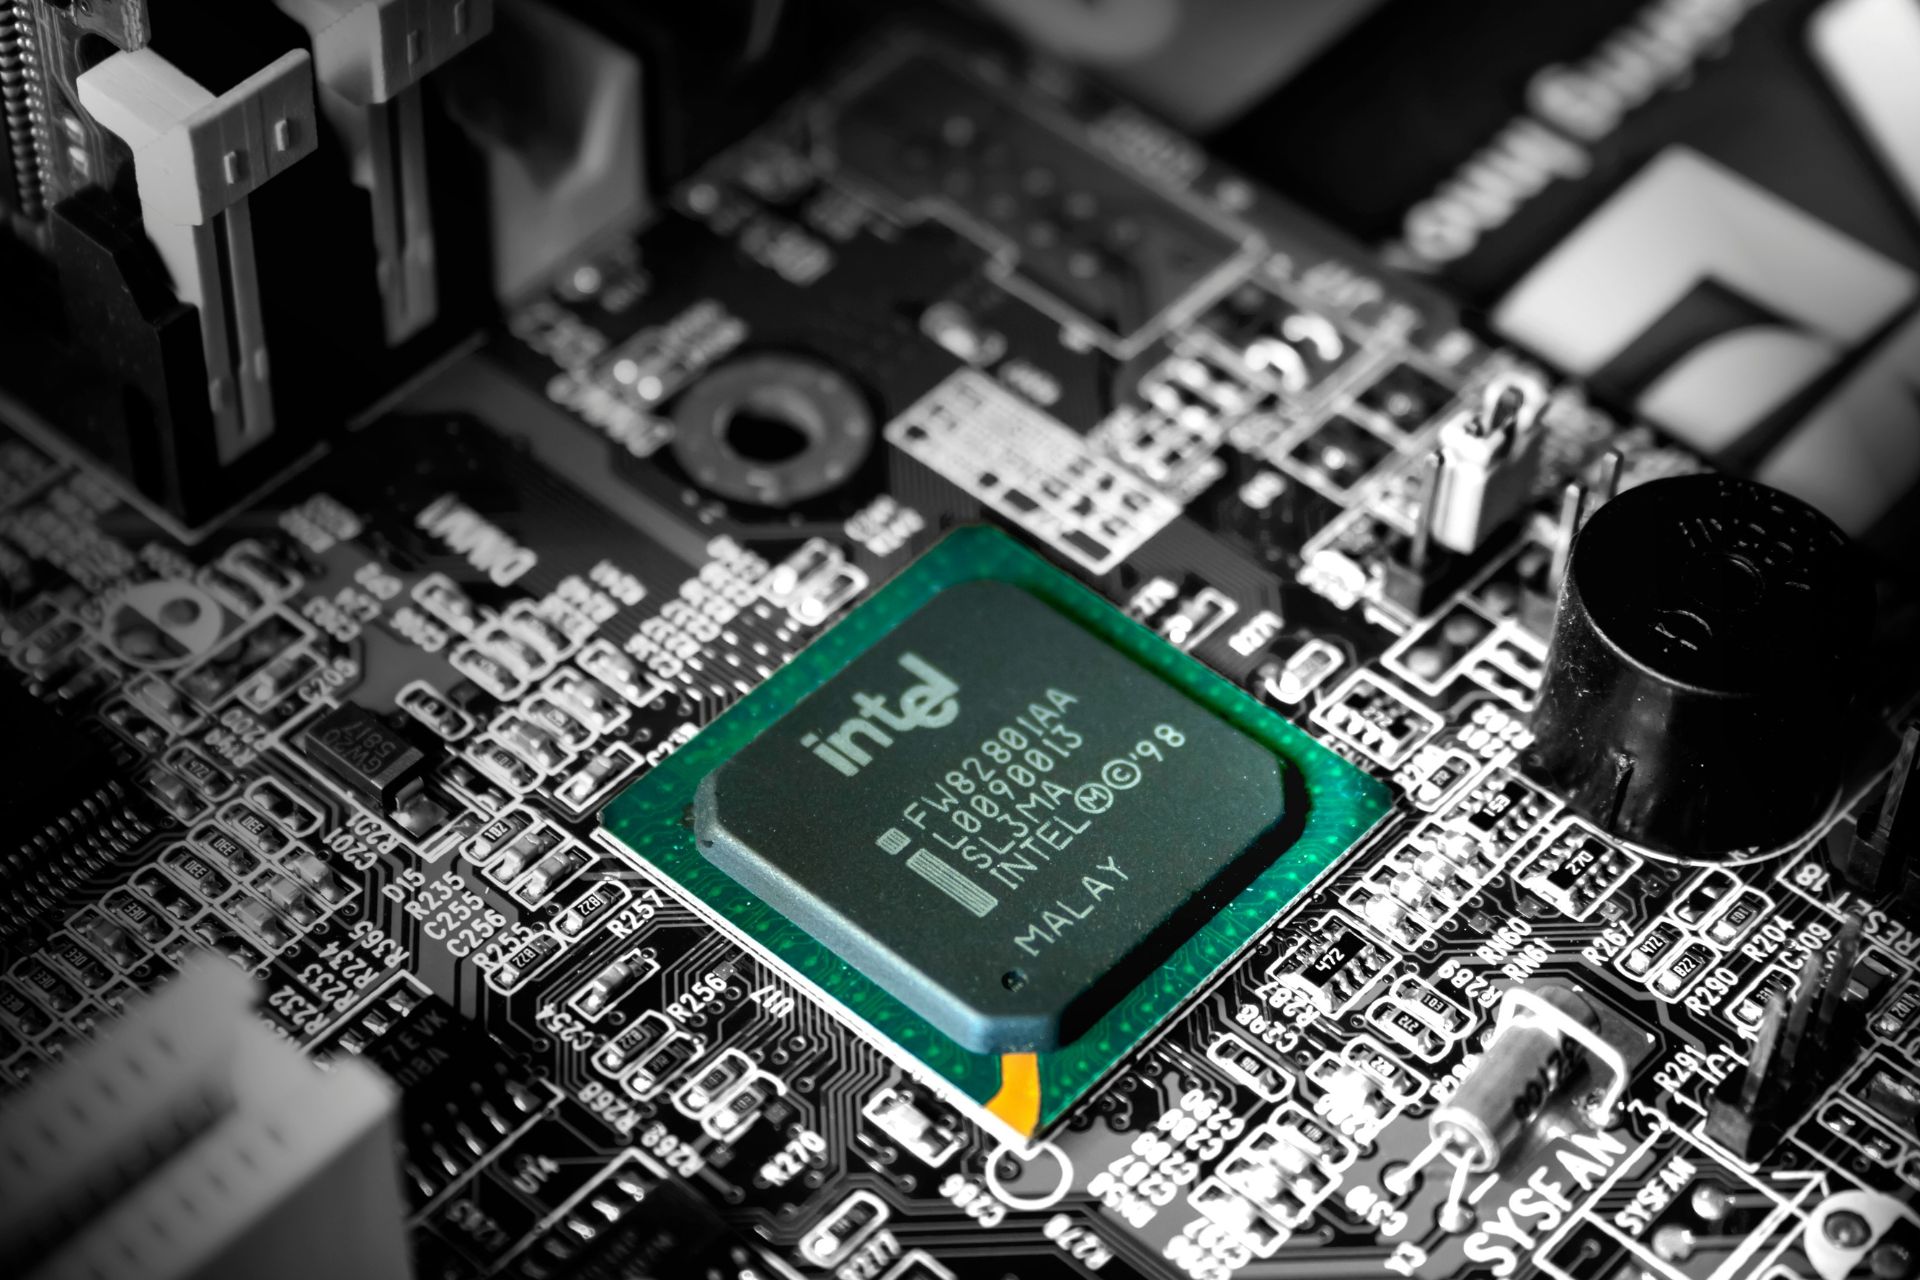 Intel CPU market